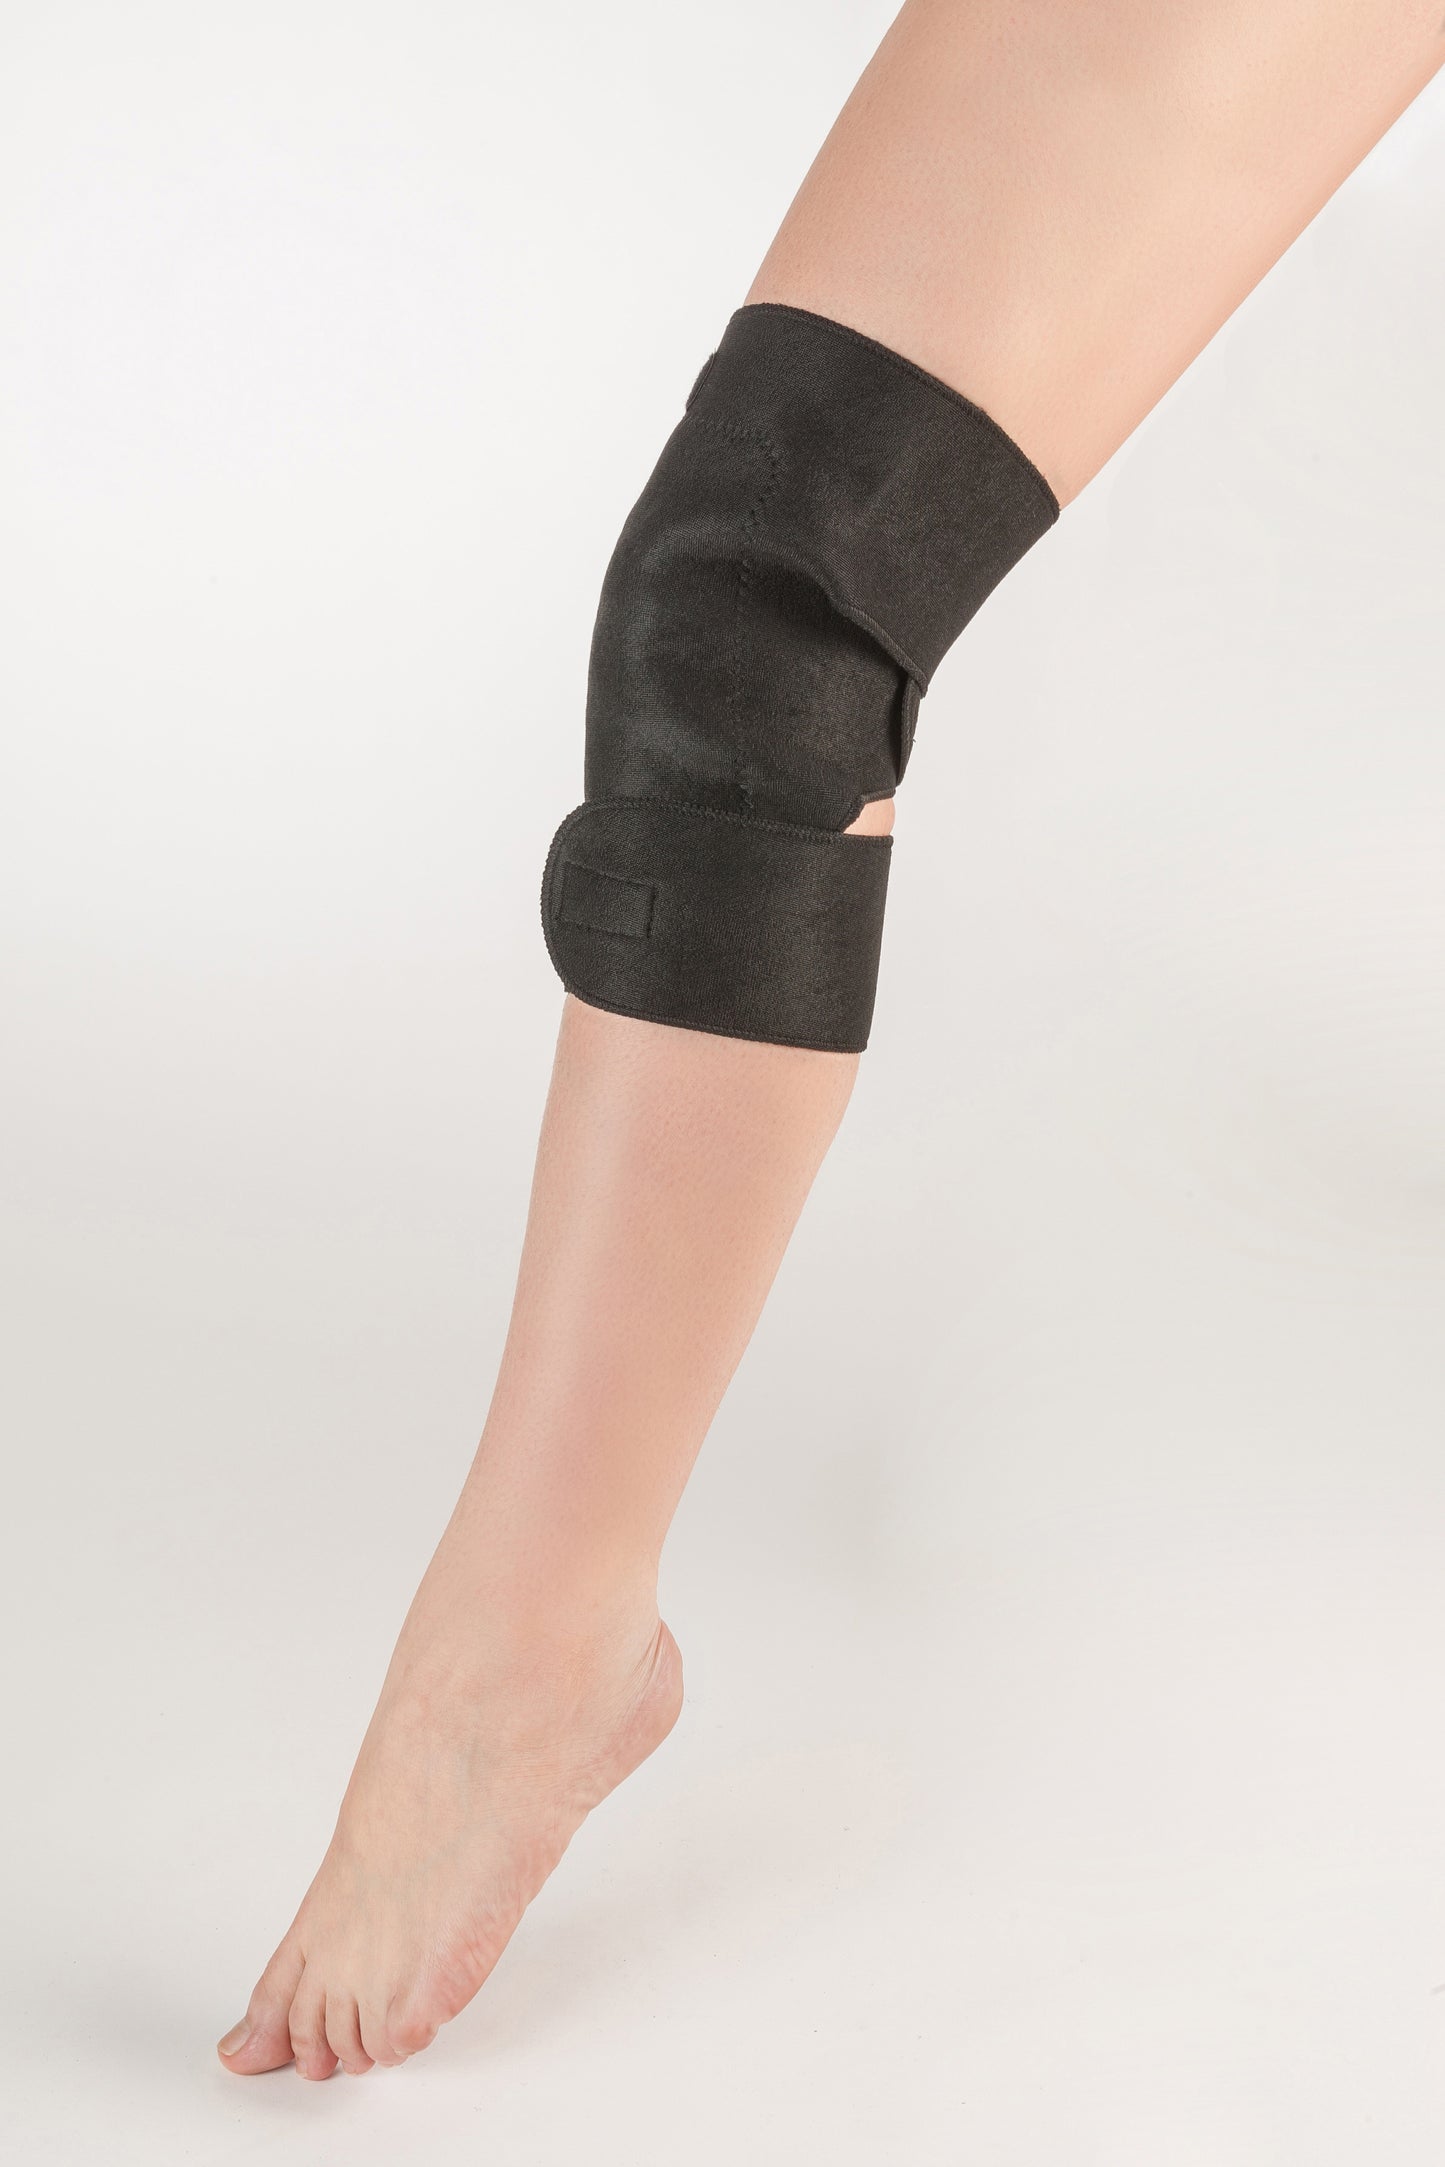 Kniebandage schwarz mit Magnet -Turmalin